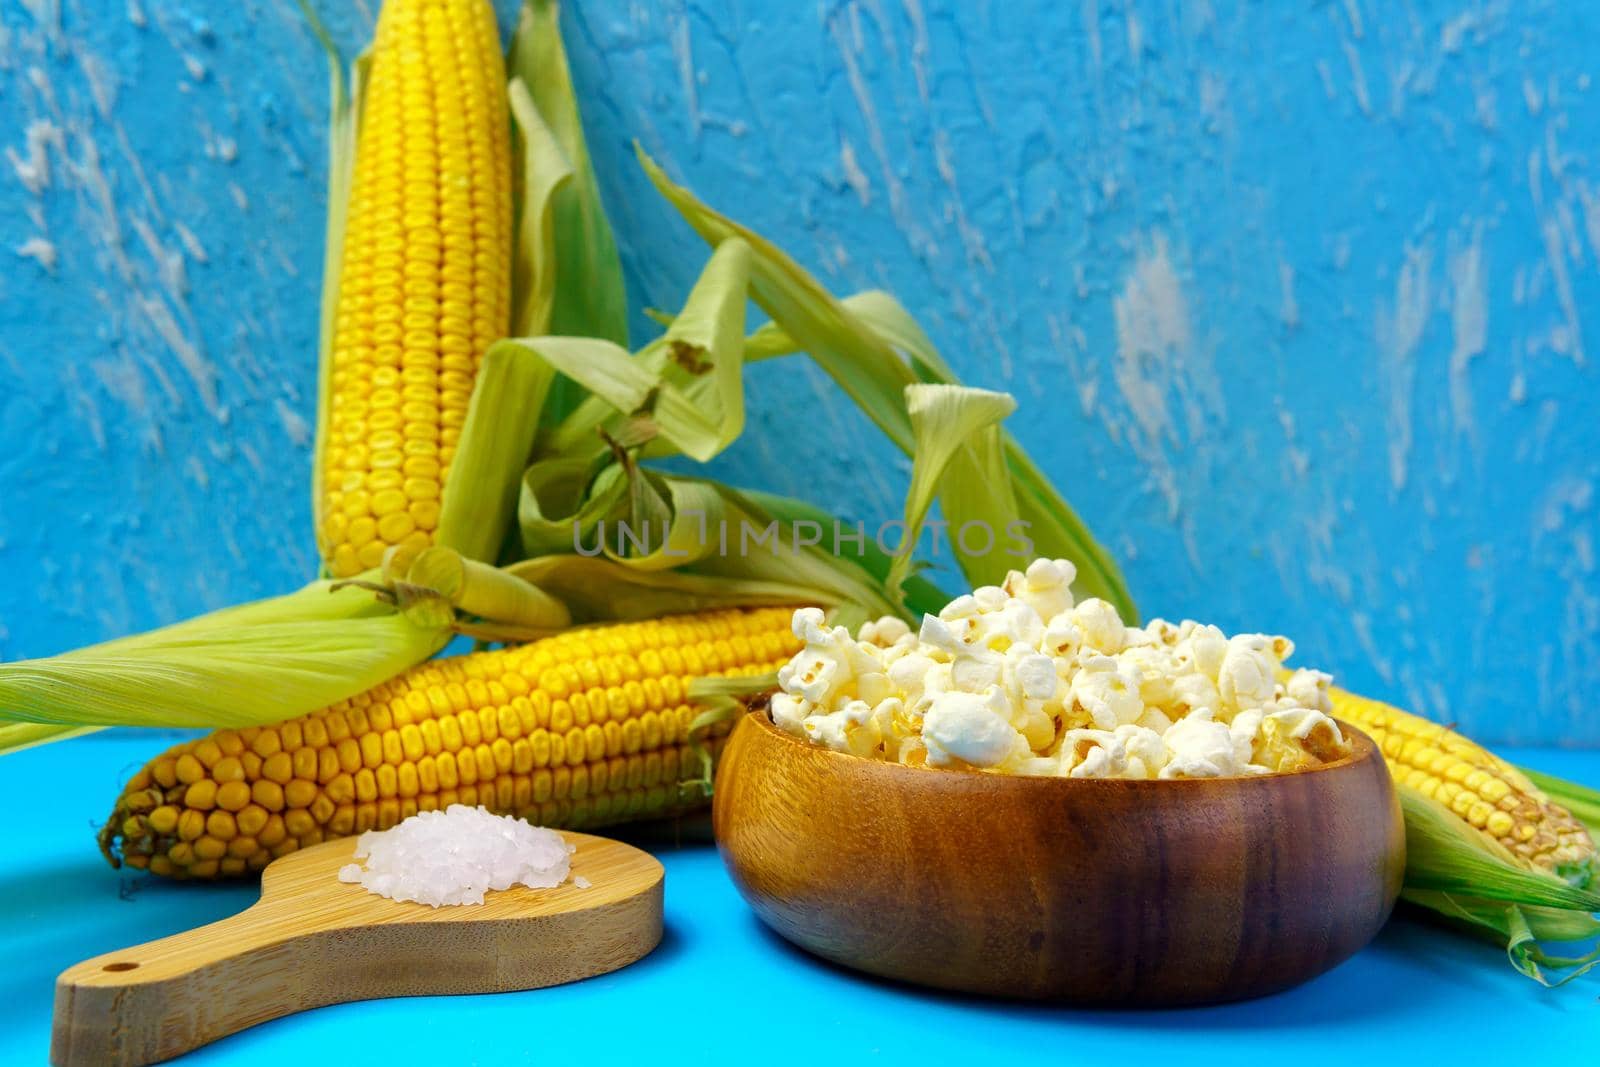 Harvest corn, corn on the cob . Popcorn in bowl blue background by darksoul72